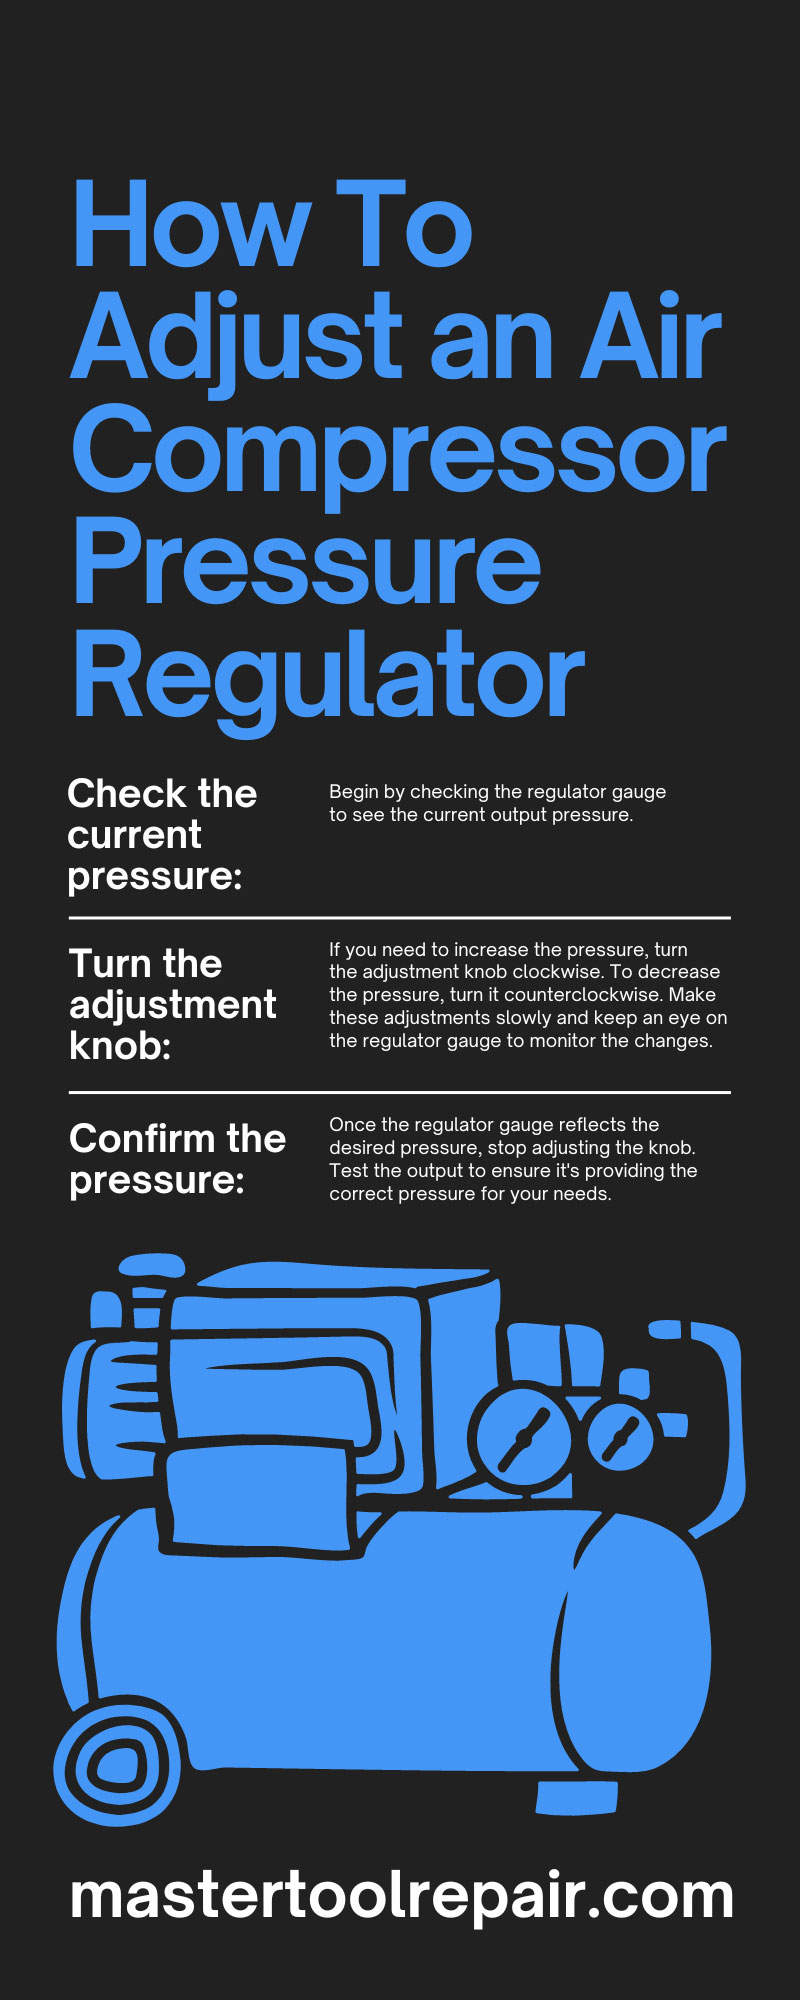 How To Adjust an Air Compressor Pressure Regulator